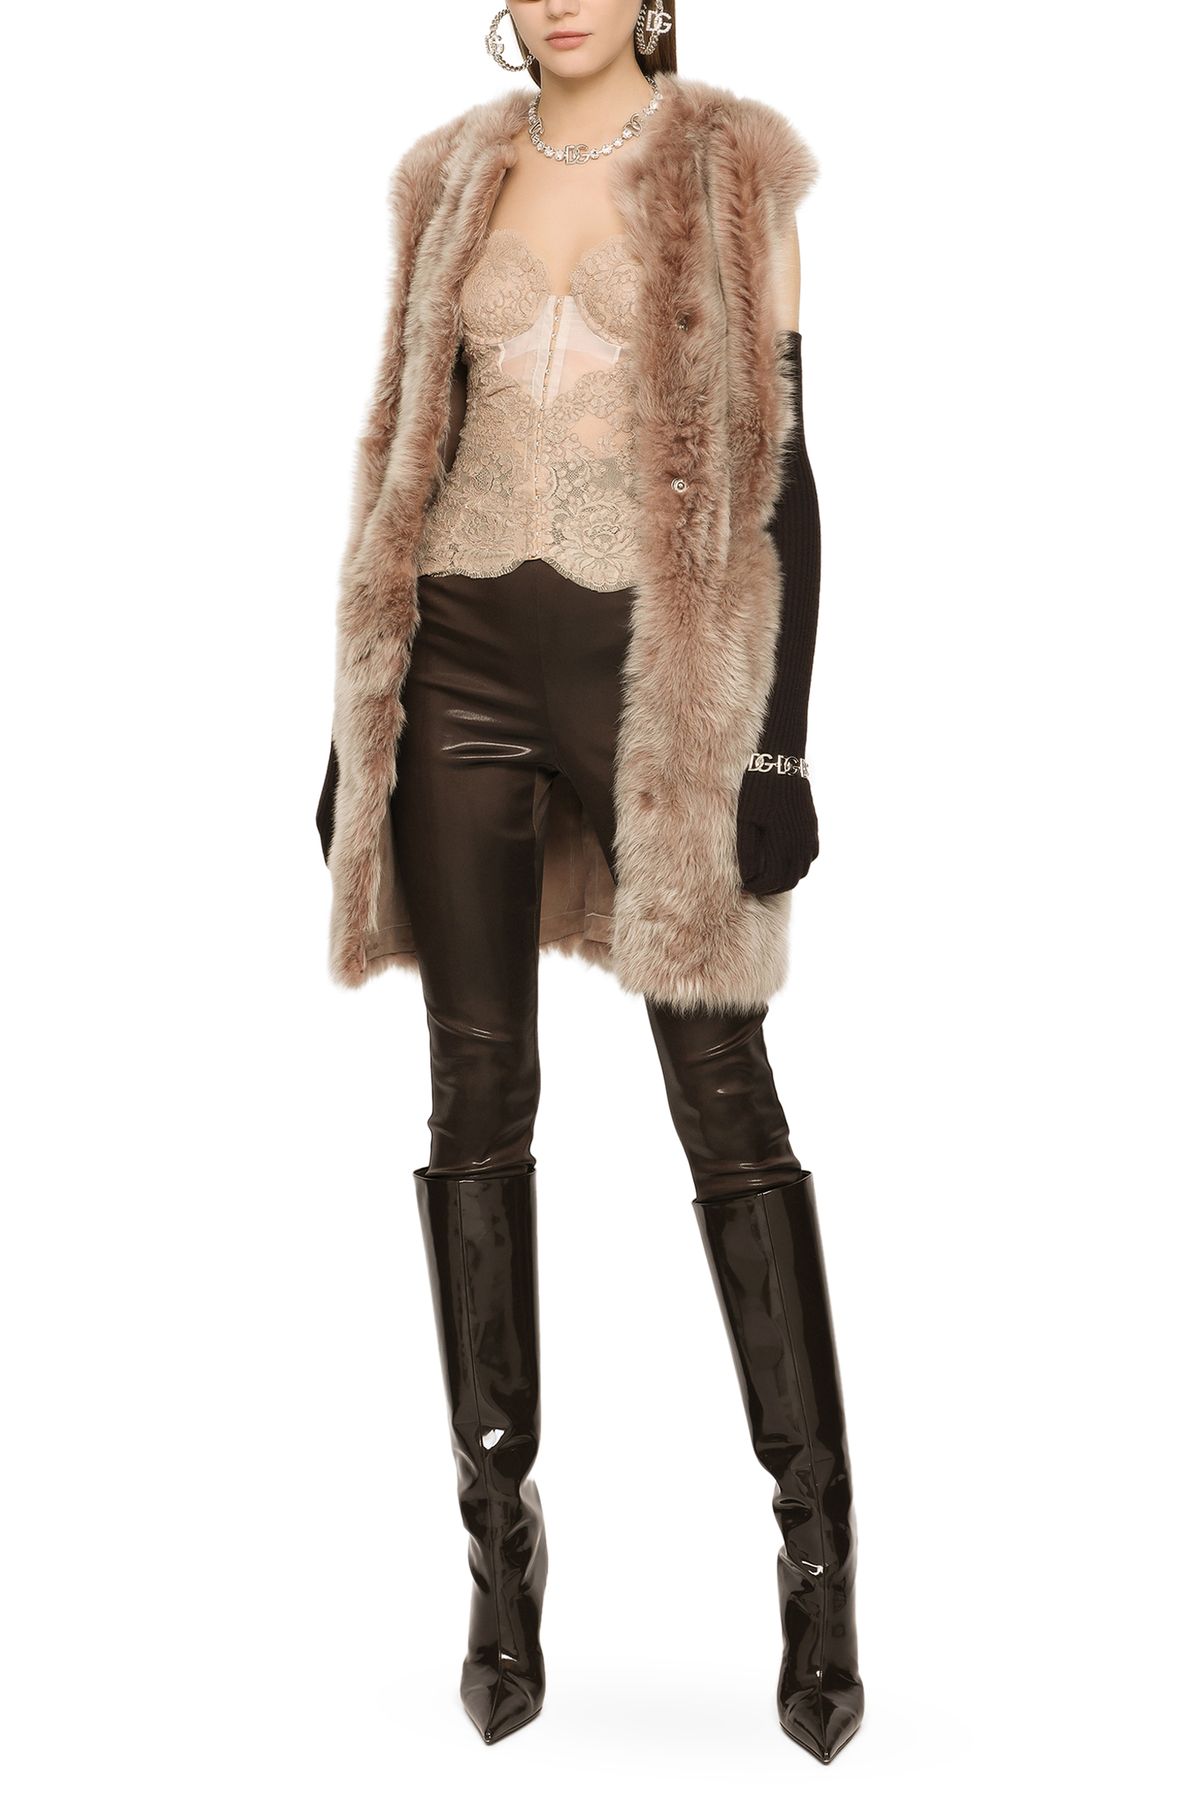 Dolce & Gabbana Shiny satin leggings